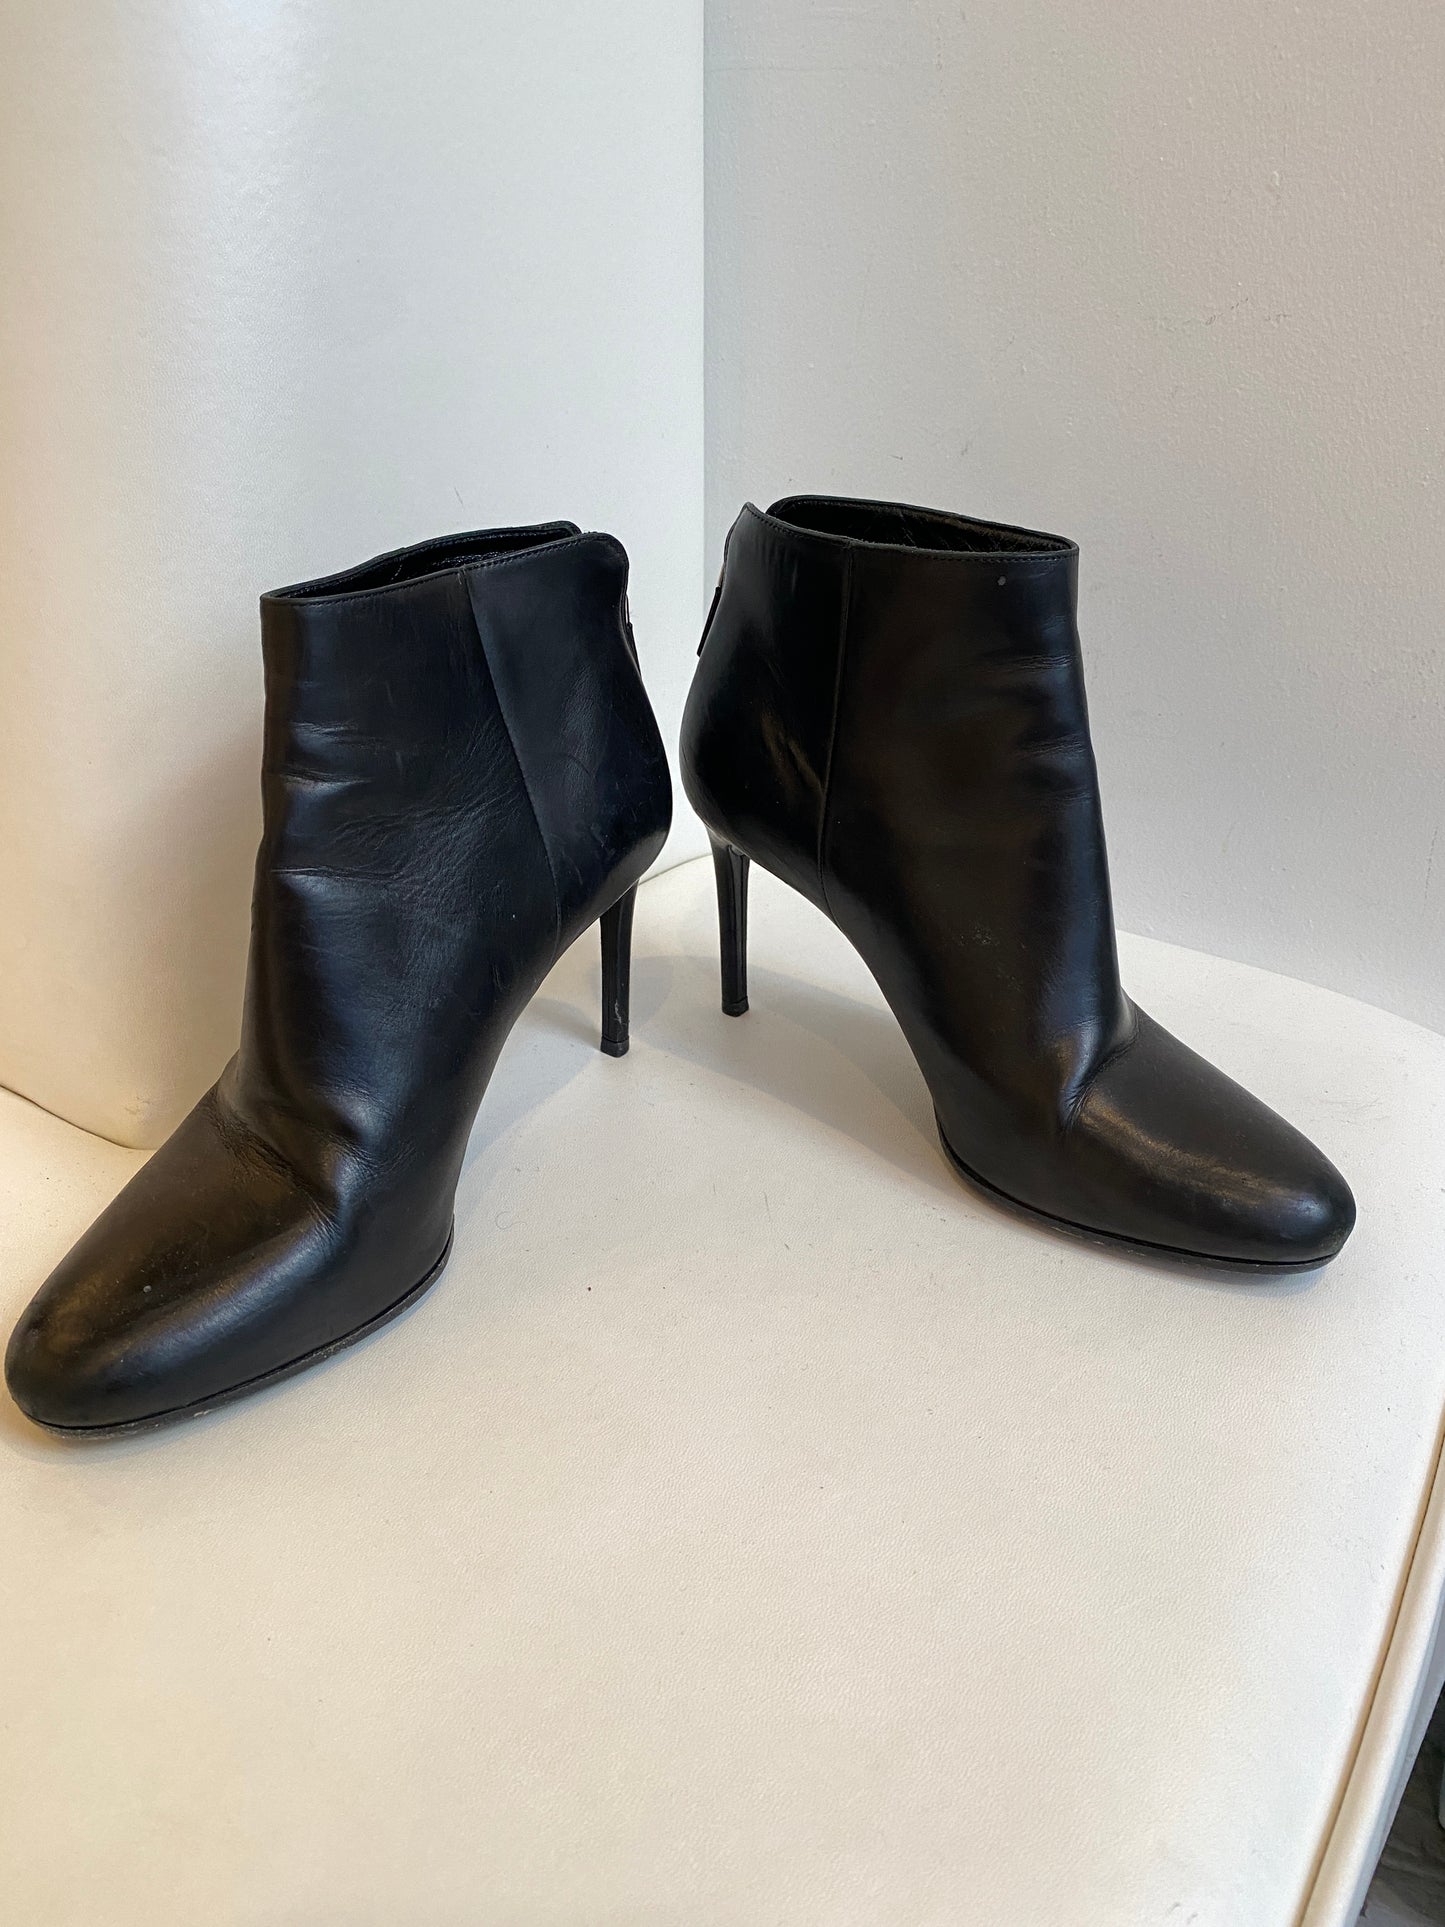 Prada black leather booties